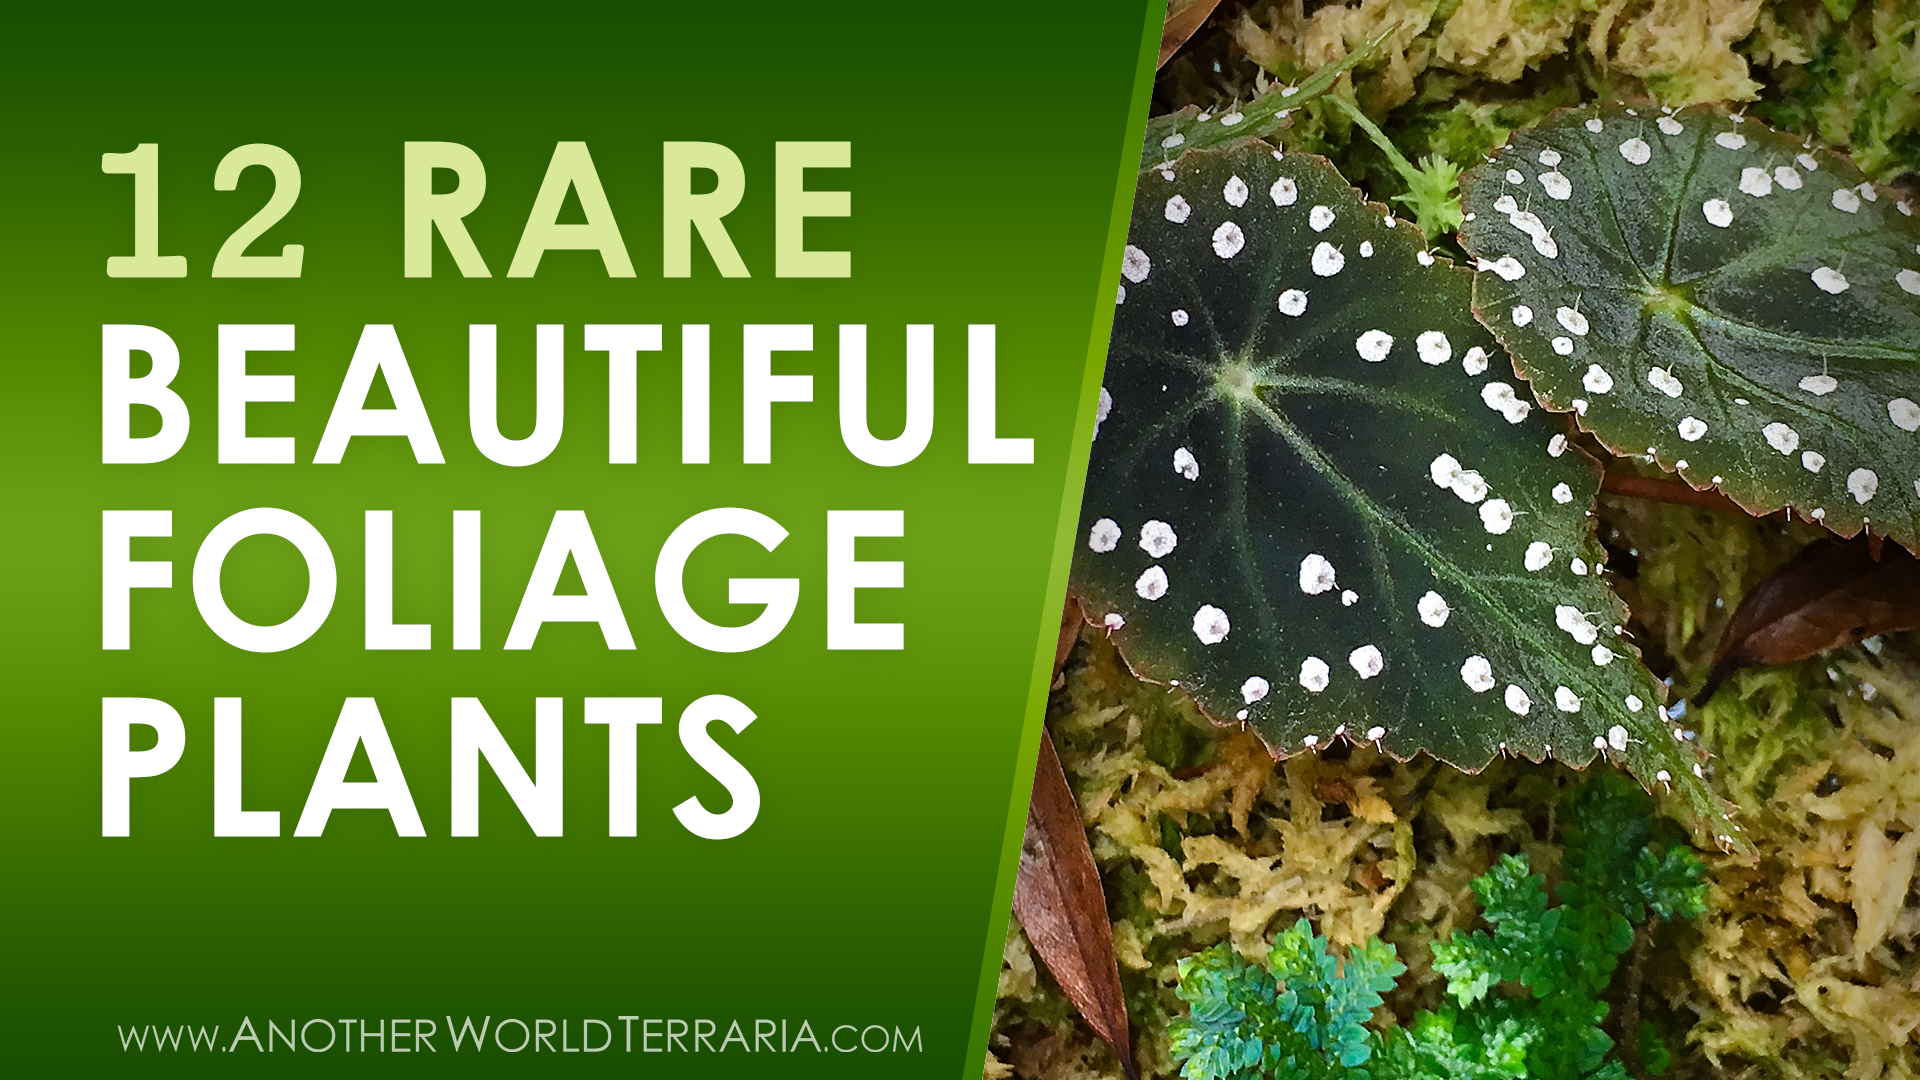 12 rare beautiful foliage plants